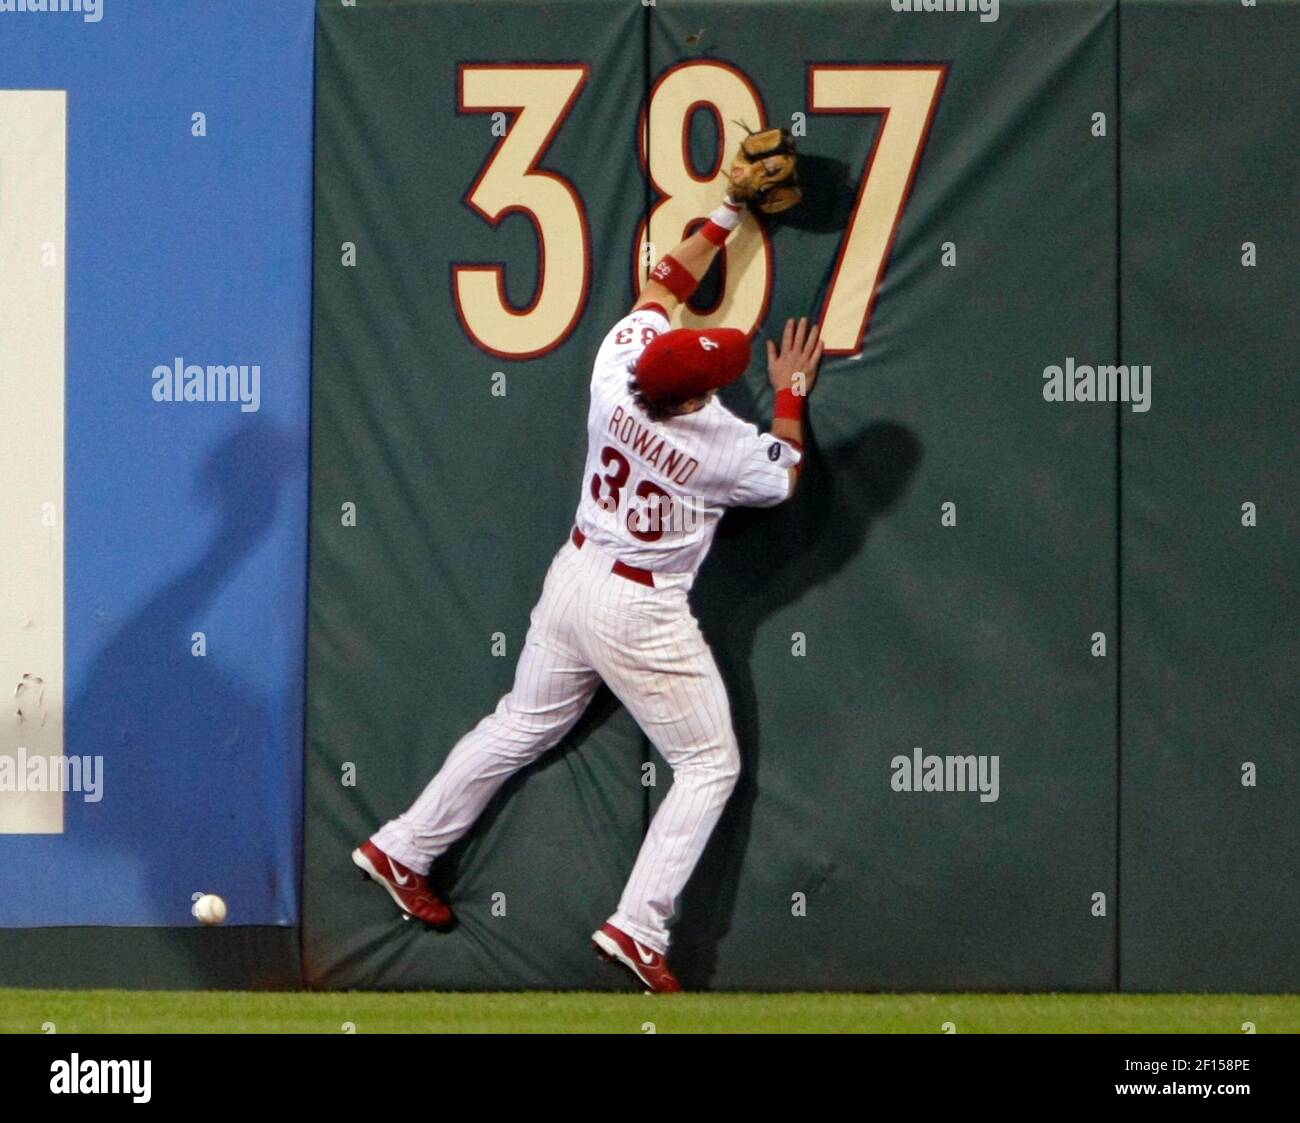 Philadelphia Phillies centerfielder Aaron Rowand hits the wall